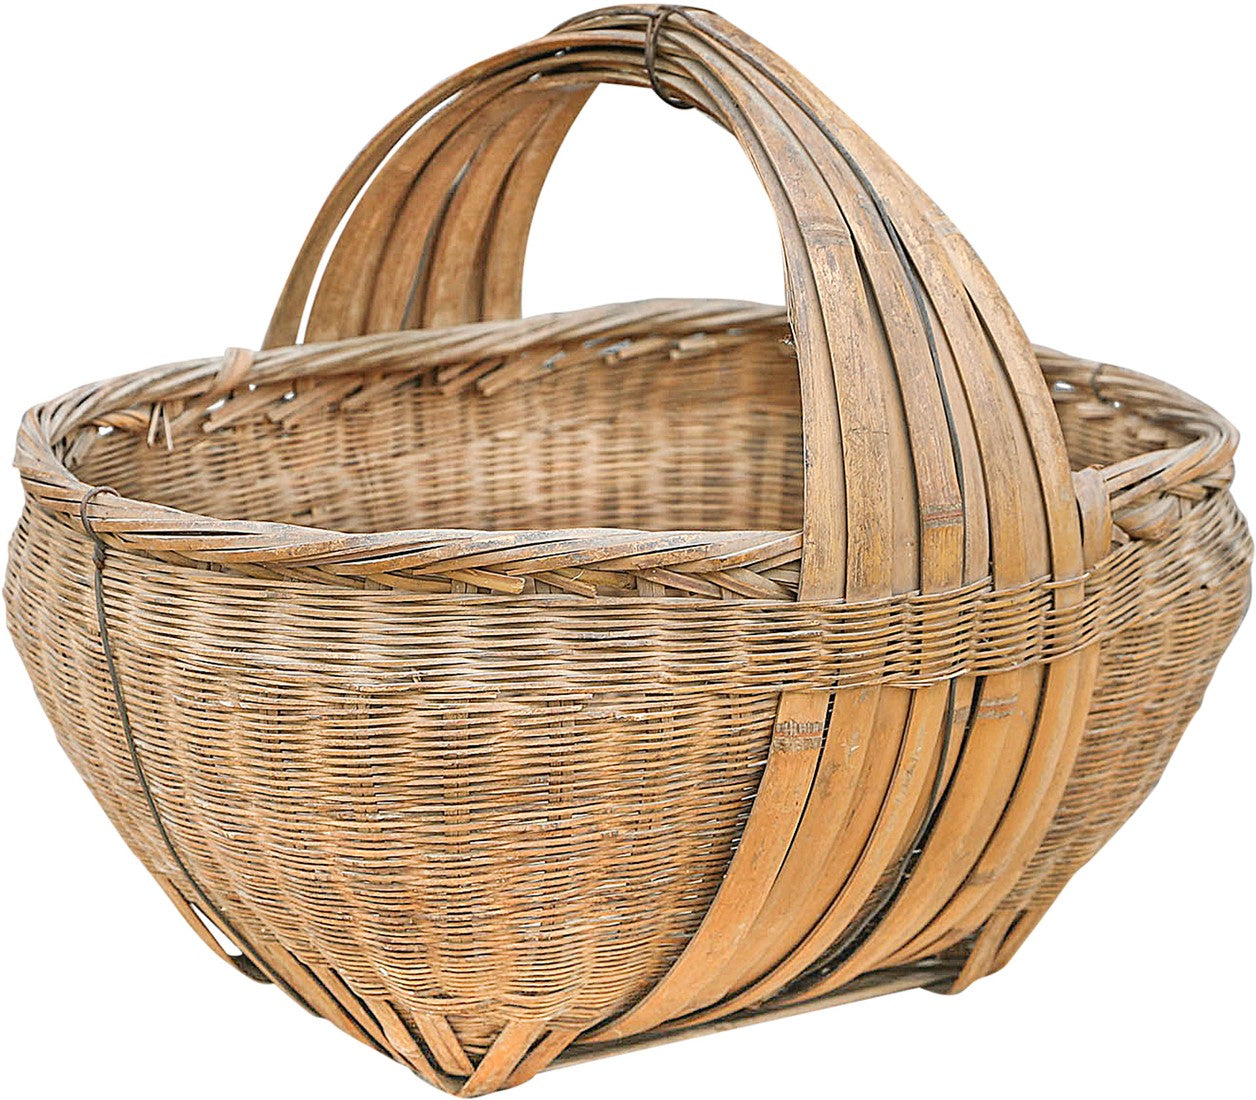 80 year old Chinese basket